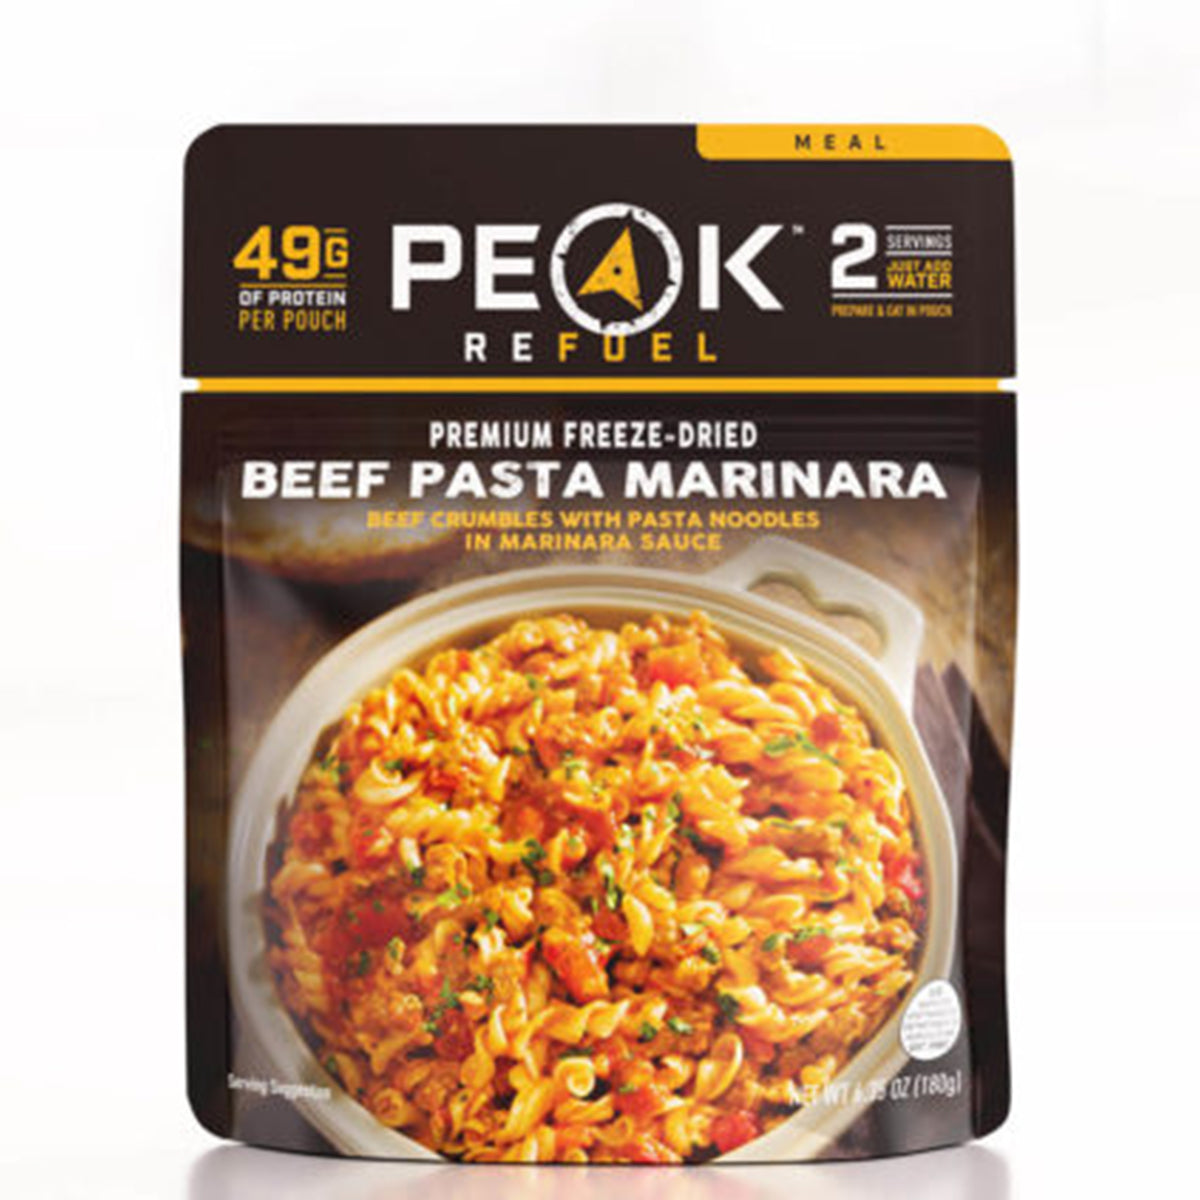 Peak Refuel Beef Pasta Marinara in Peak Refuel Beef Pasta Marinara by Peak Refuel | Camping - goHUNT Shop by GOHUNT | Peak Refuel - GOHUNT Shop